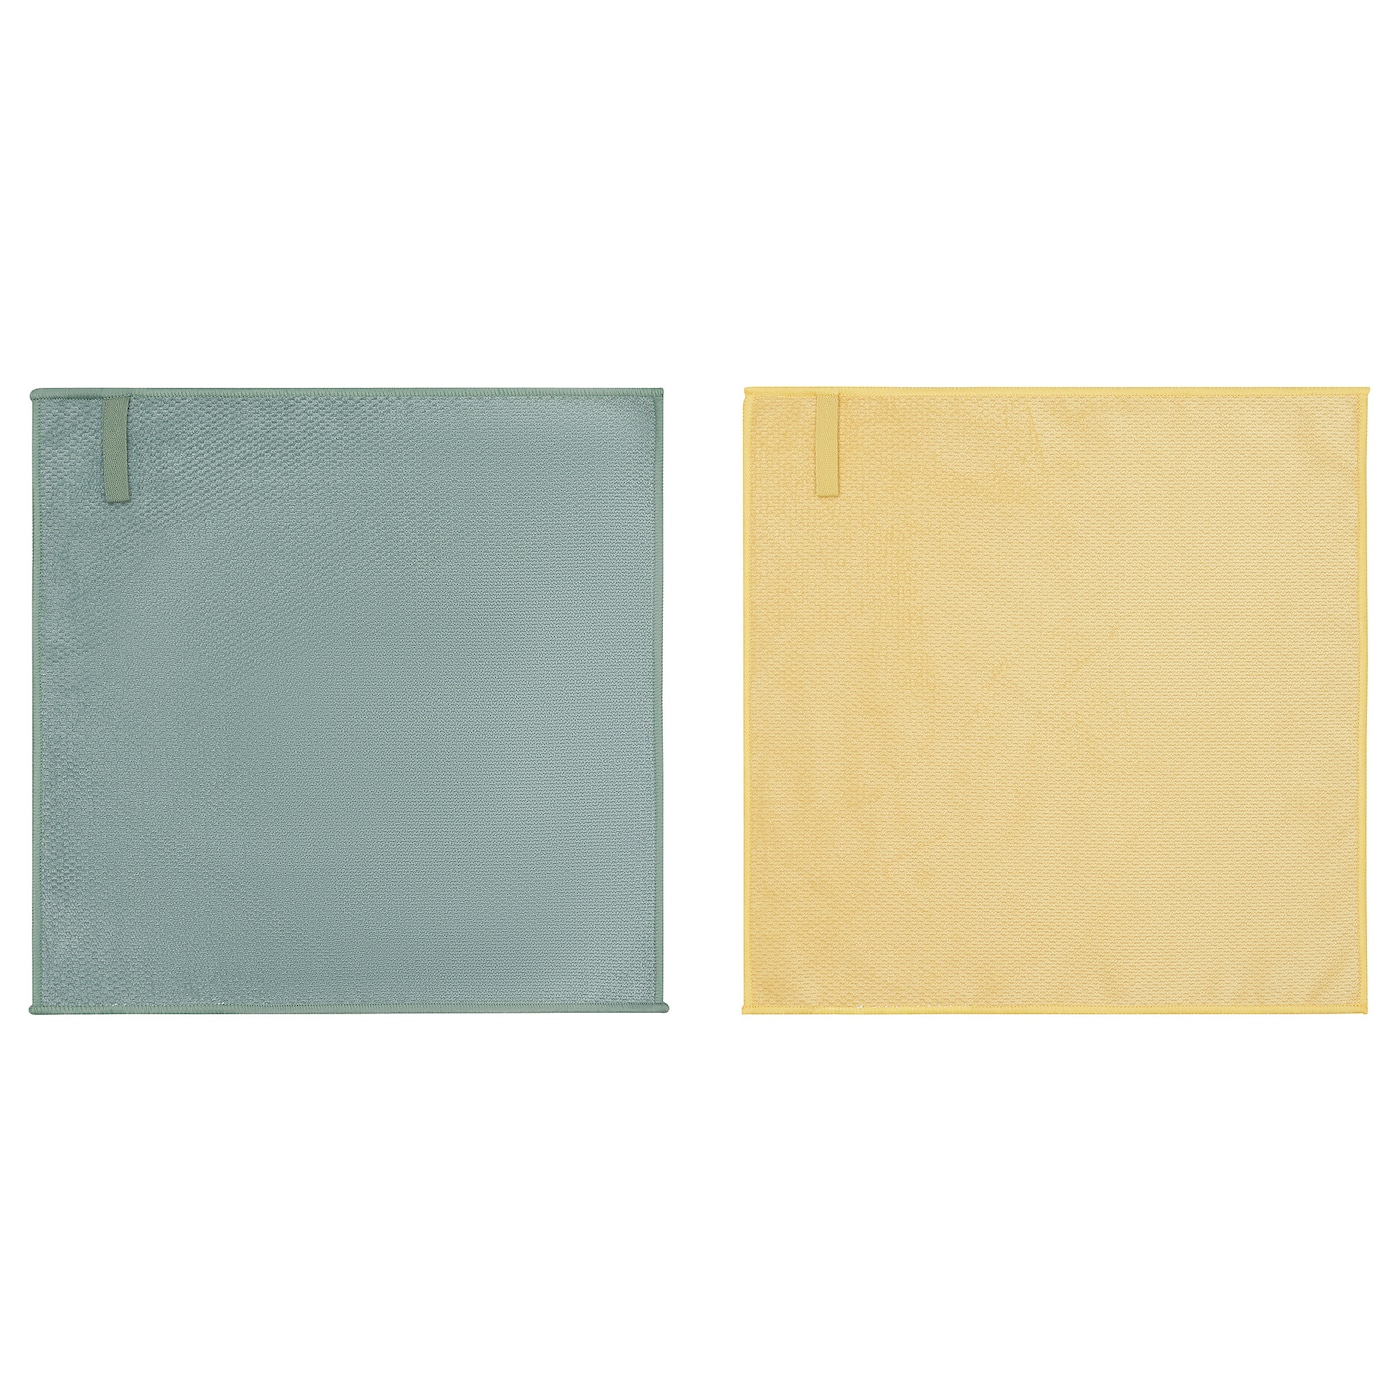 Ткань из микрофибры - IKEA PEPPRIG, зеленый/желтый, ПЕППРИГ ИКЕА